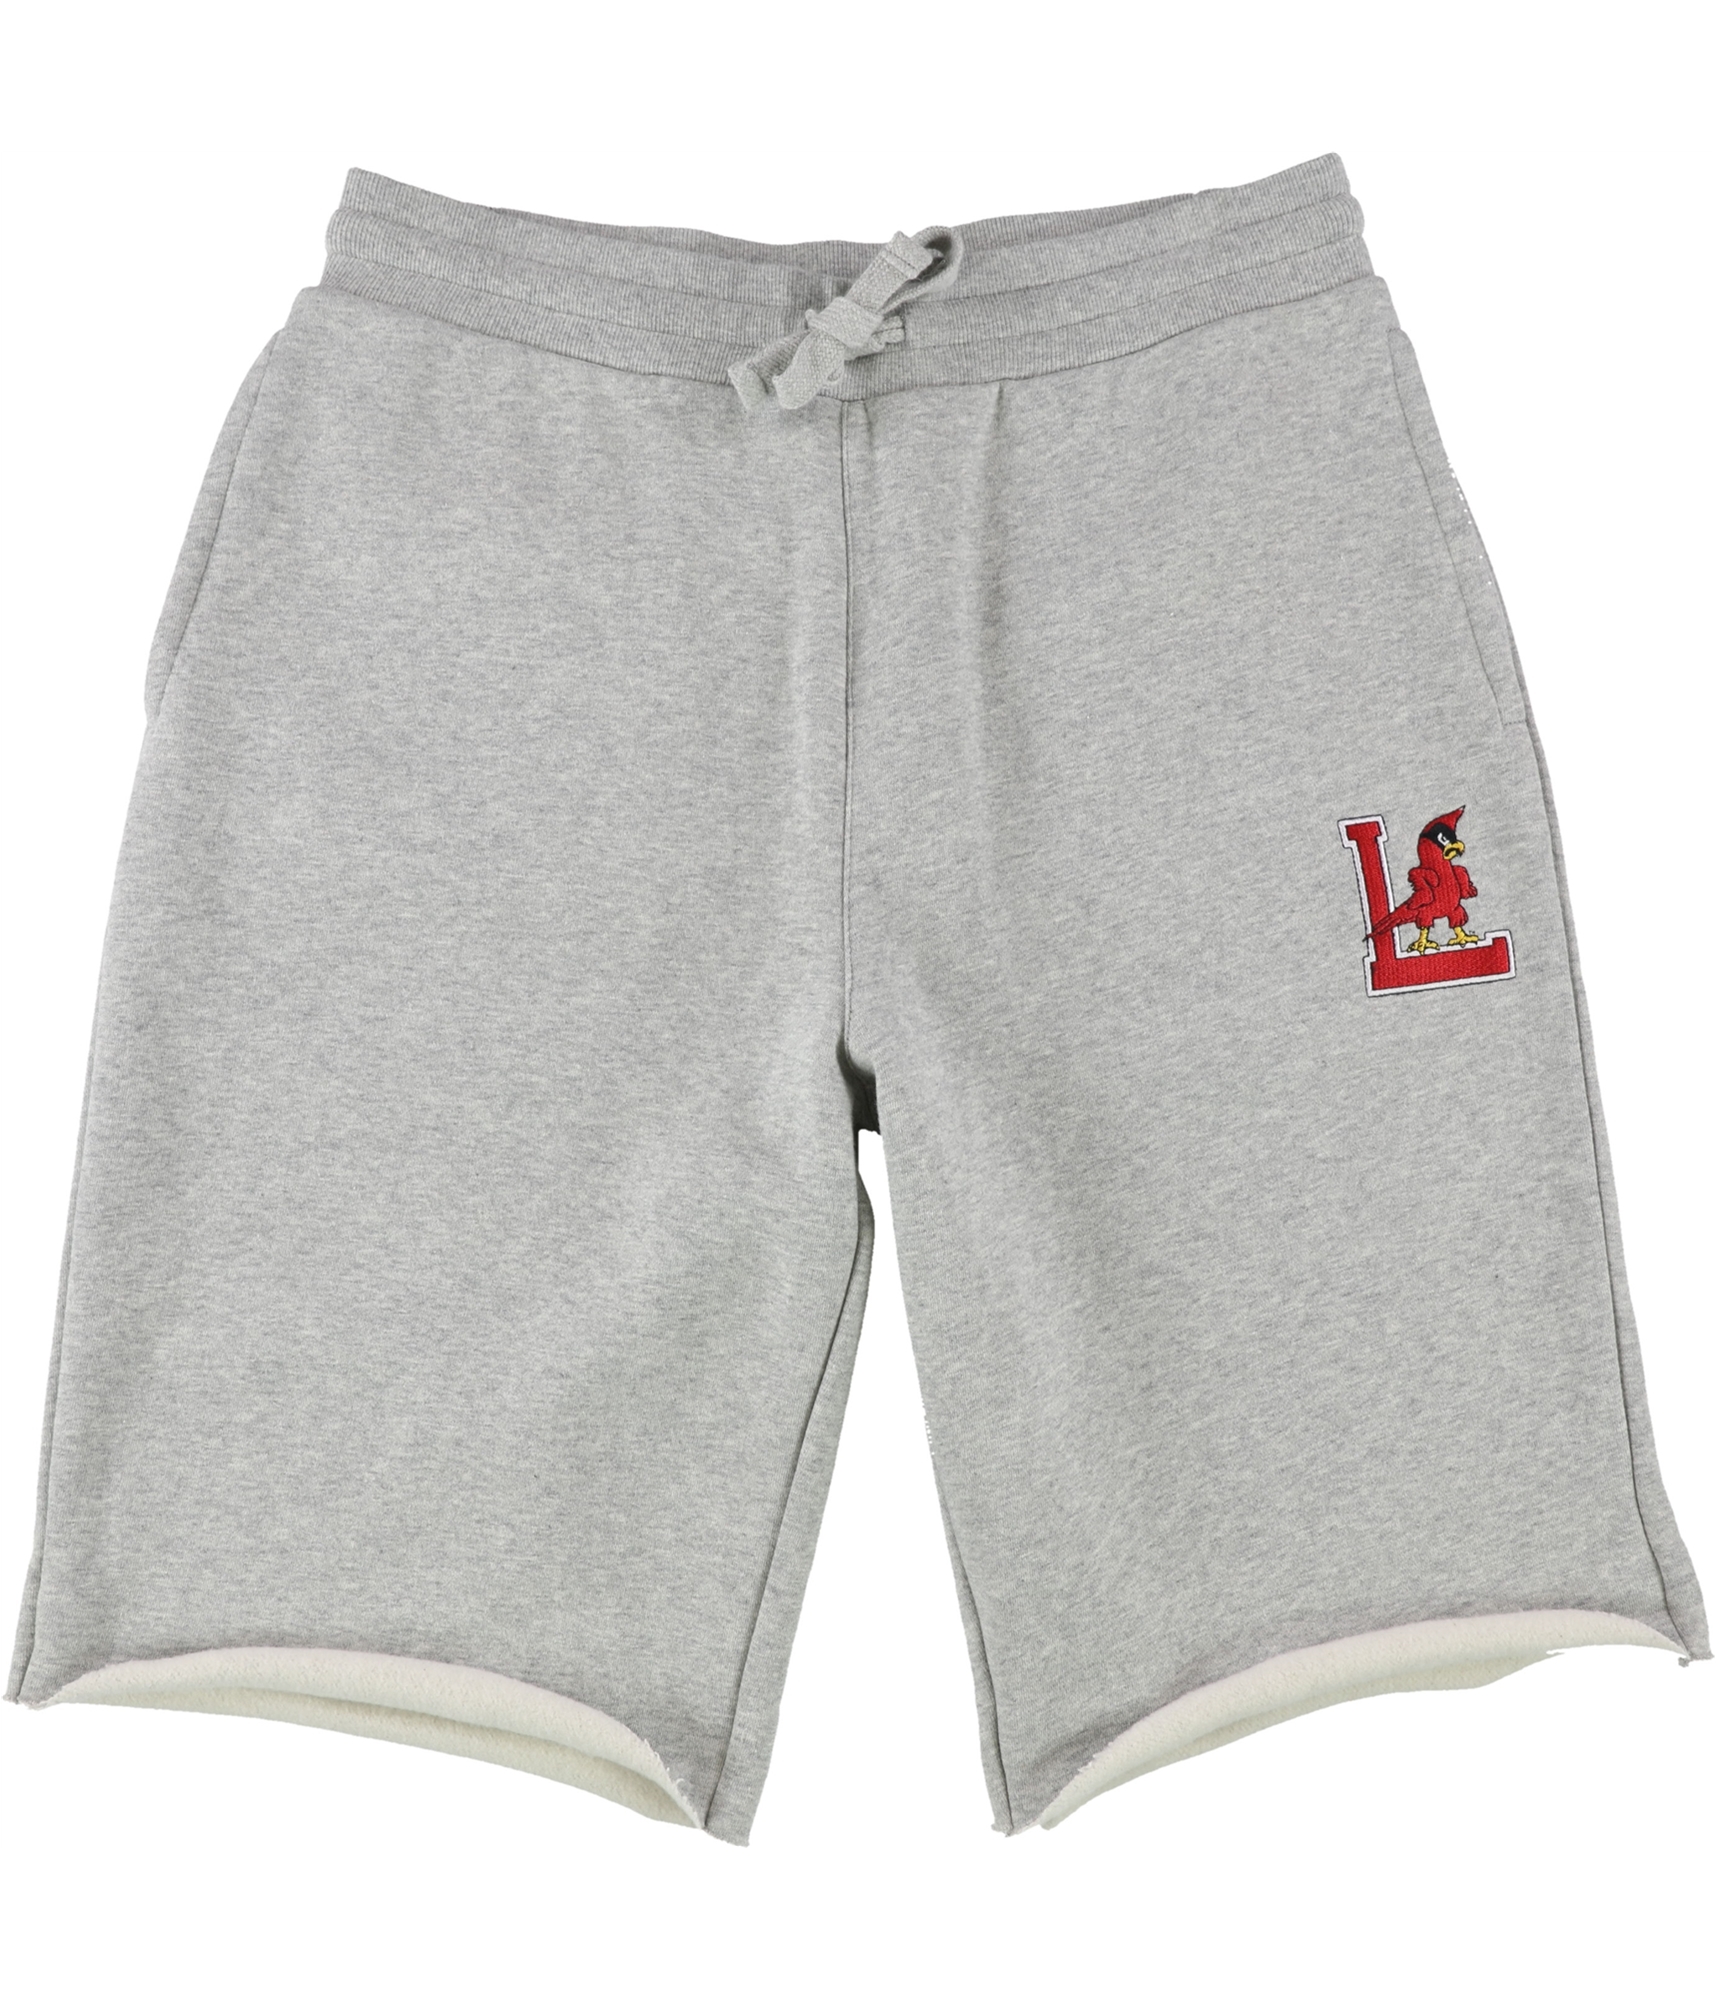 University of Louisville Cardinals Basketball Swingman Shorts